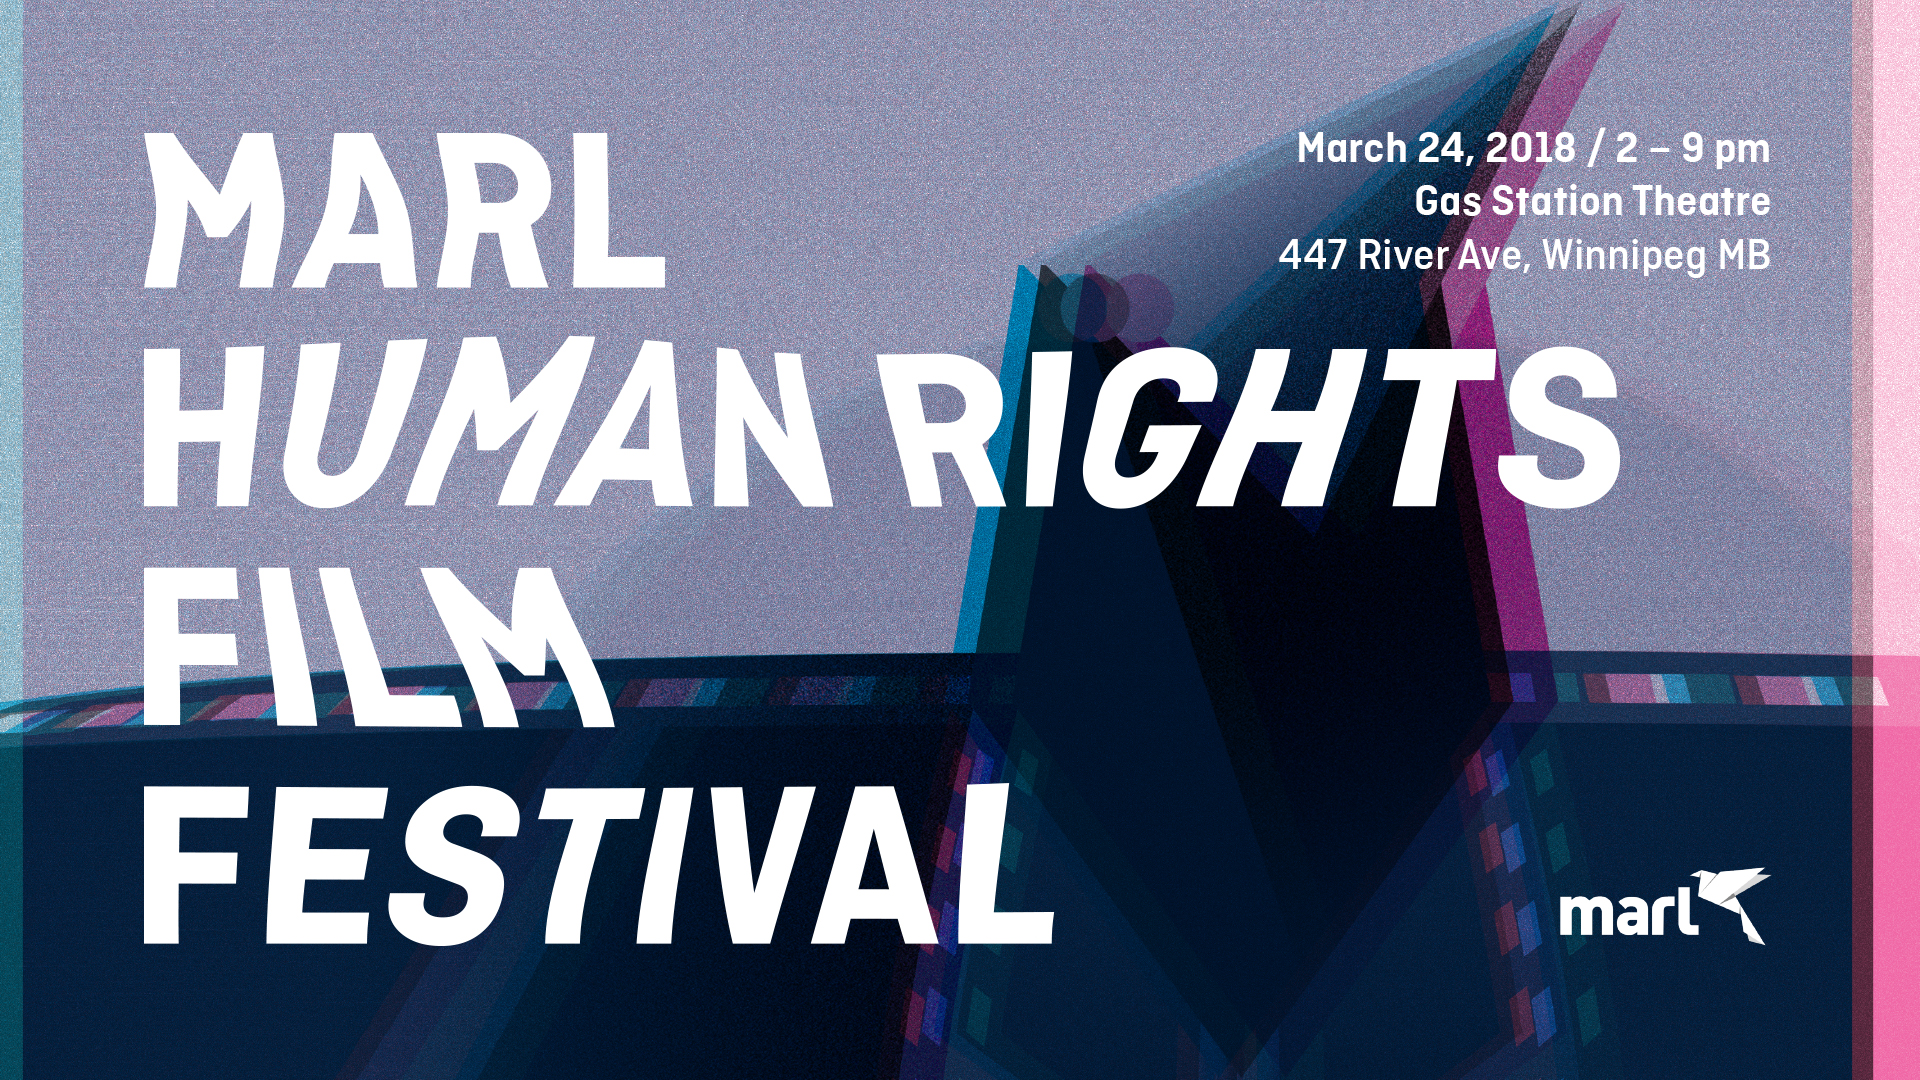 MARL Human Rights Film Fest Poster